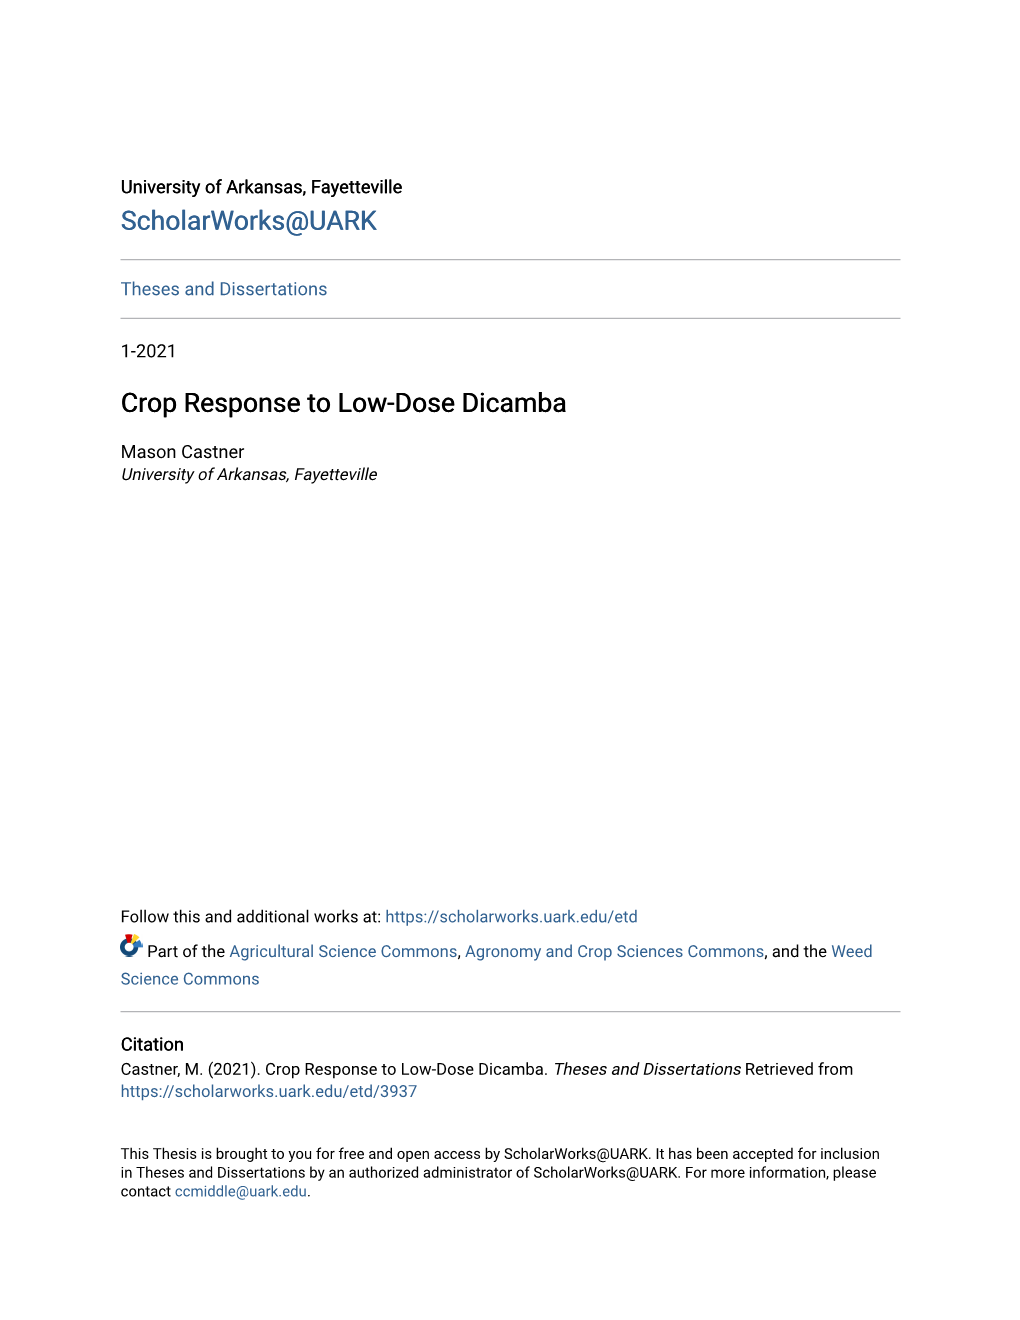 Crop Response to Low-Dose Dicamba